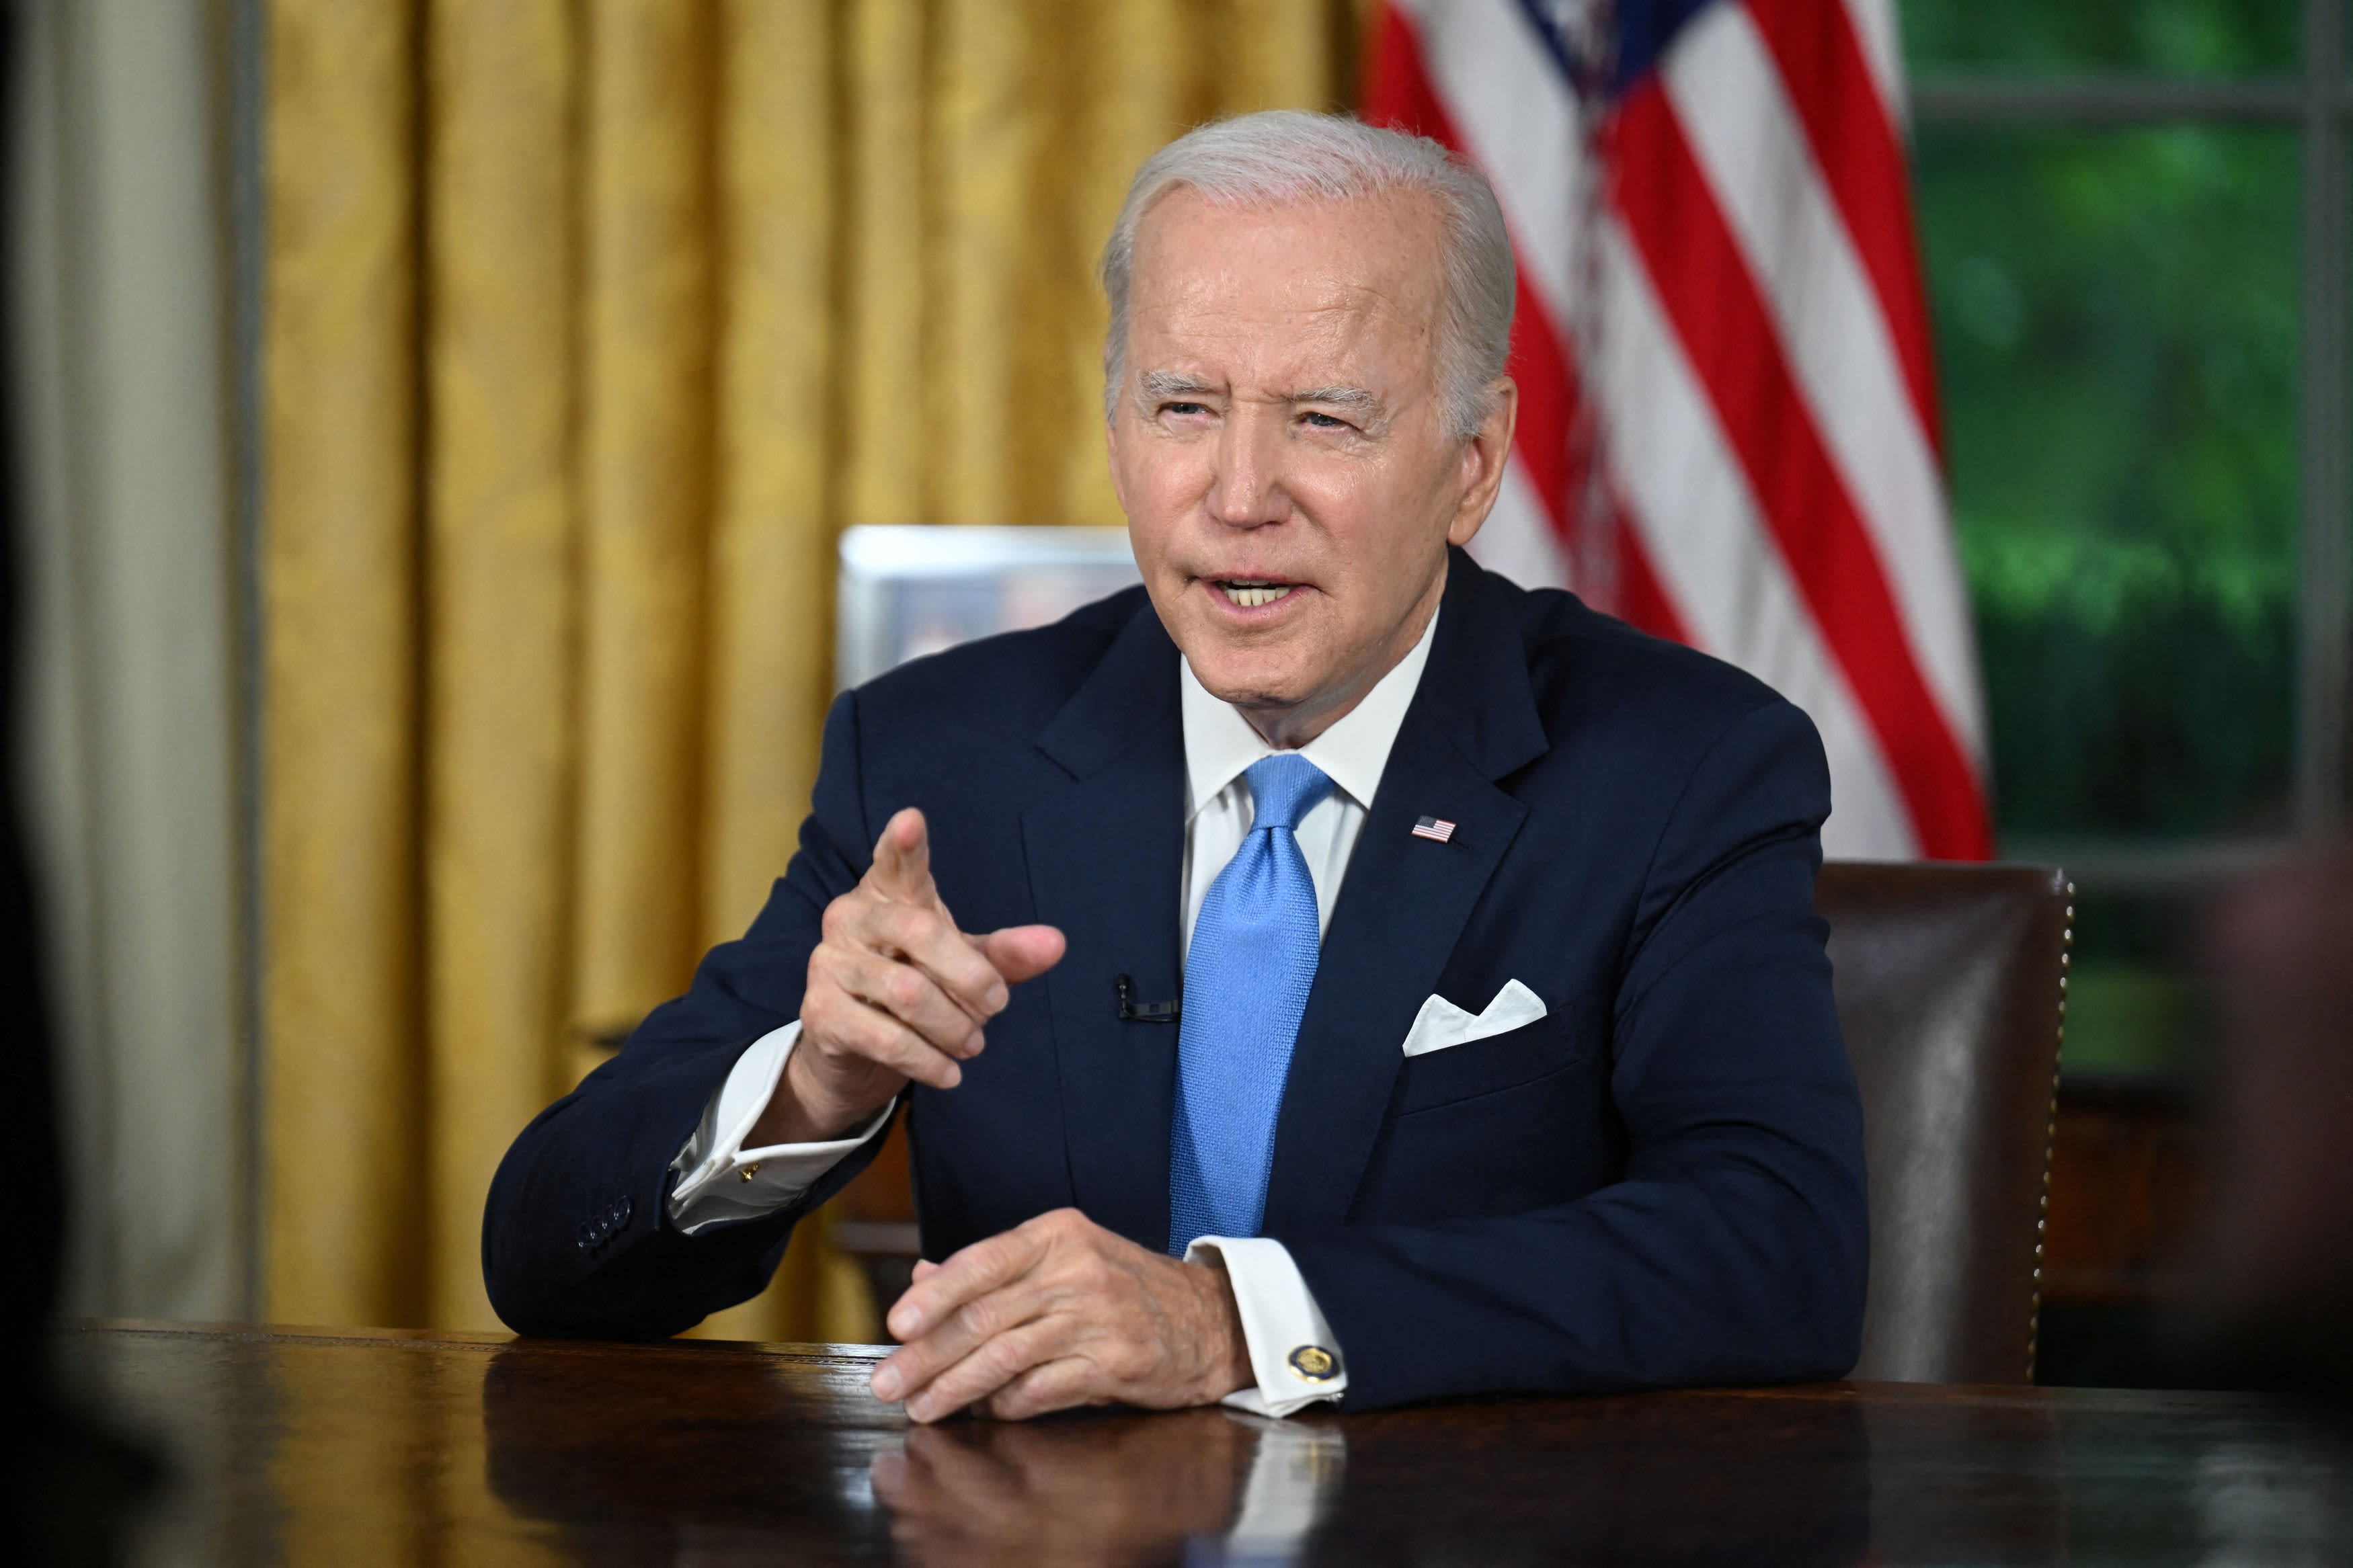 Biden says debt ceiling bill avoids catastrophic economic default